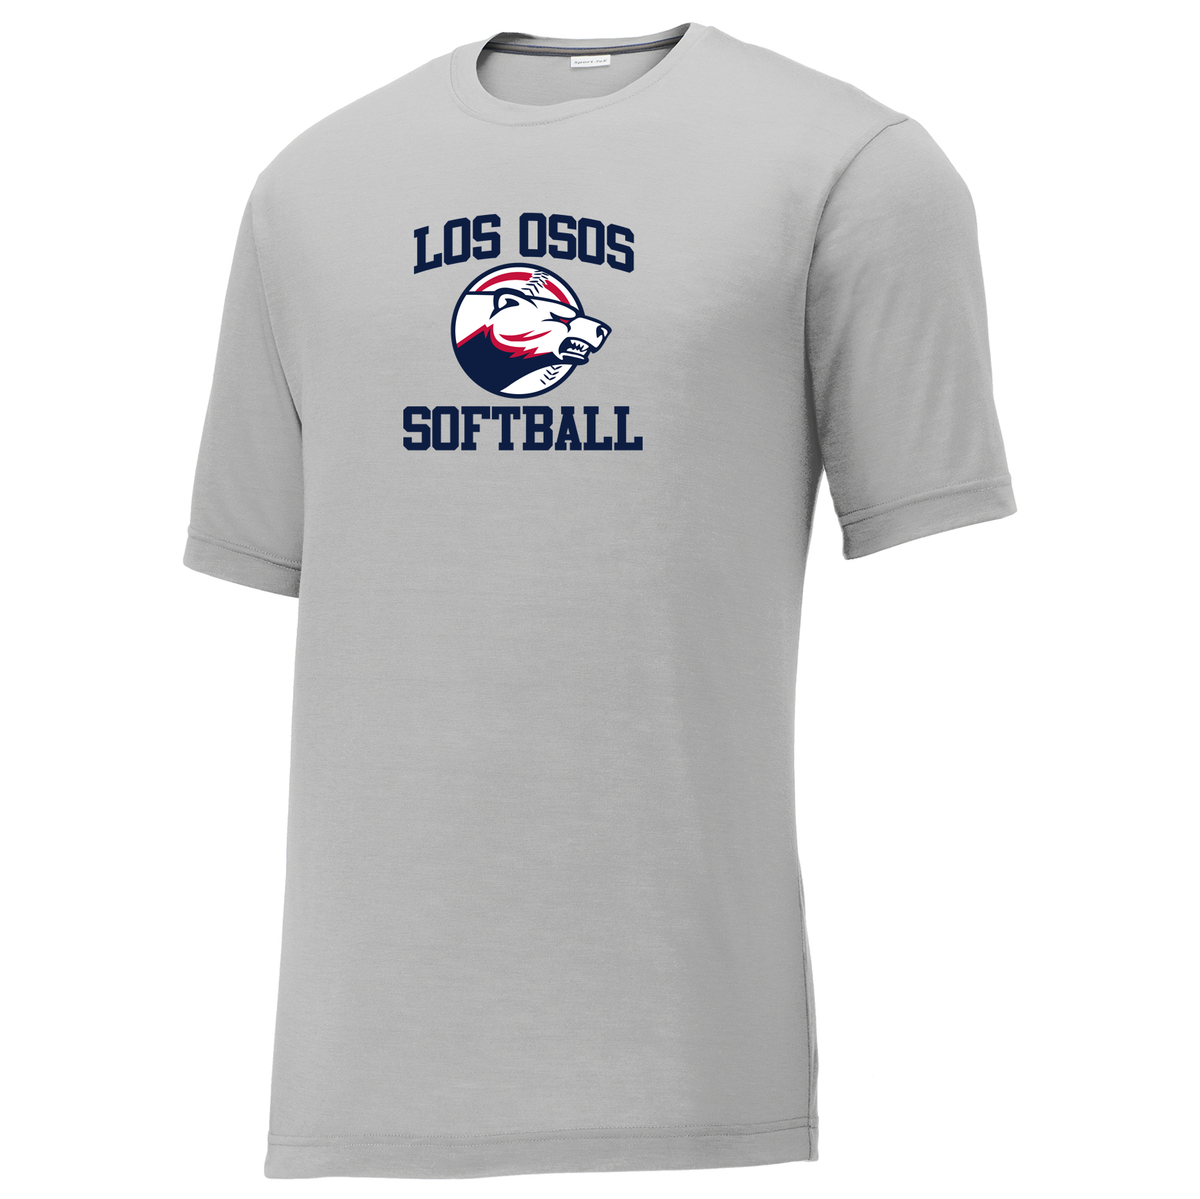 Los Osos Softball CottonTouch Performance T-Shirt